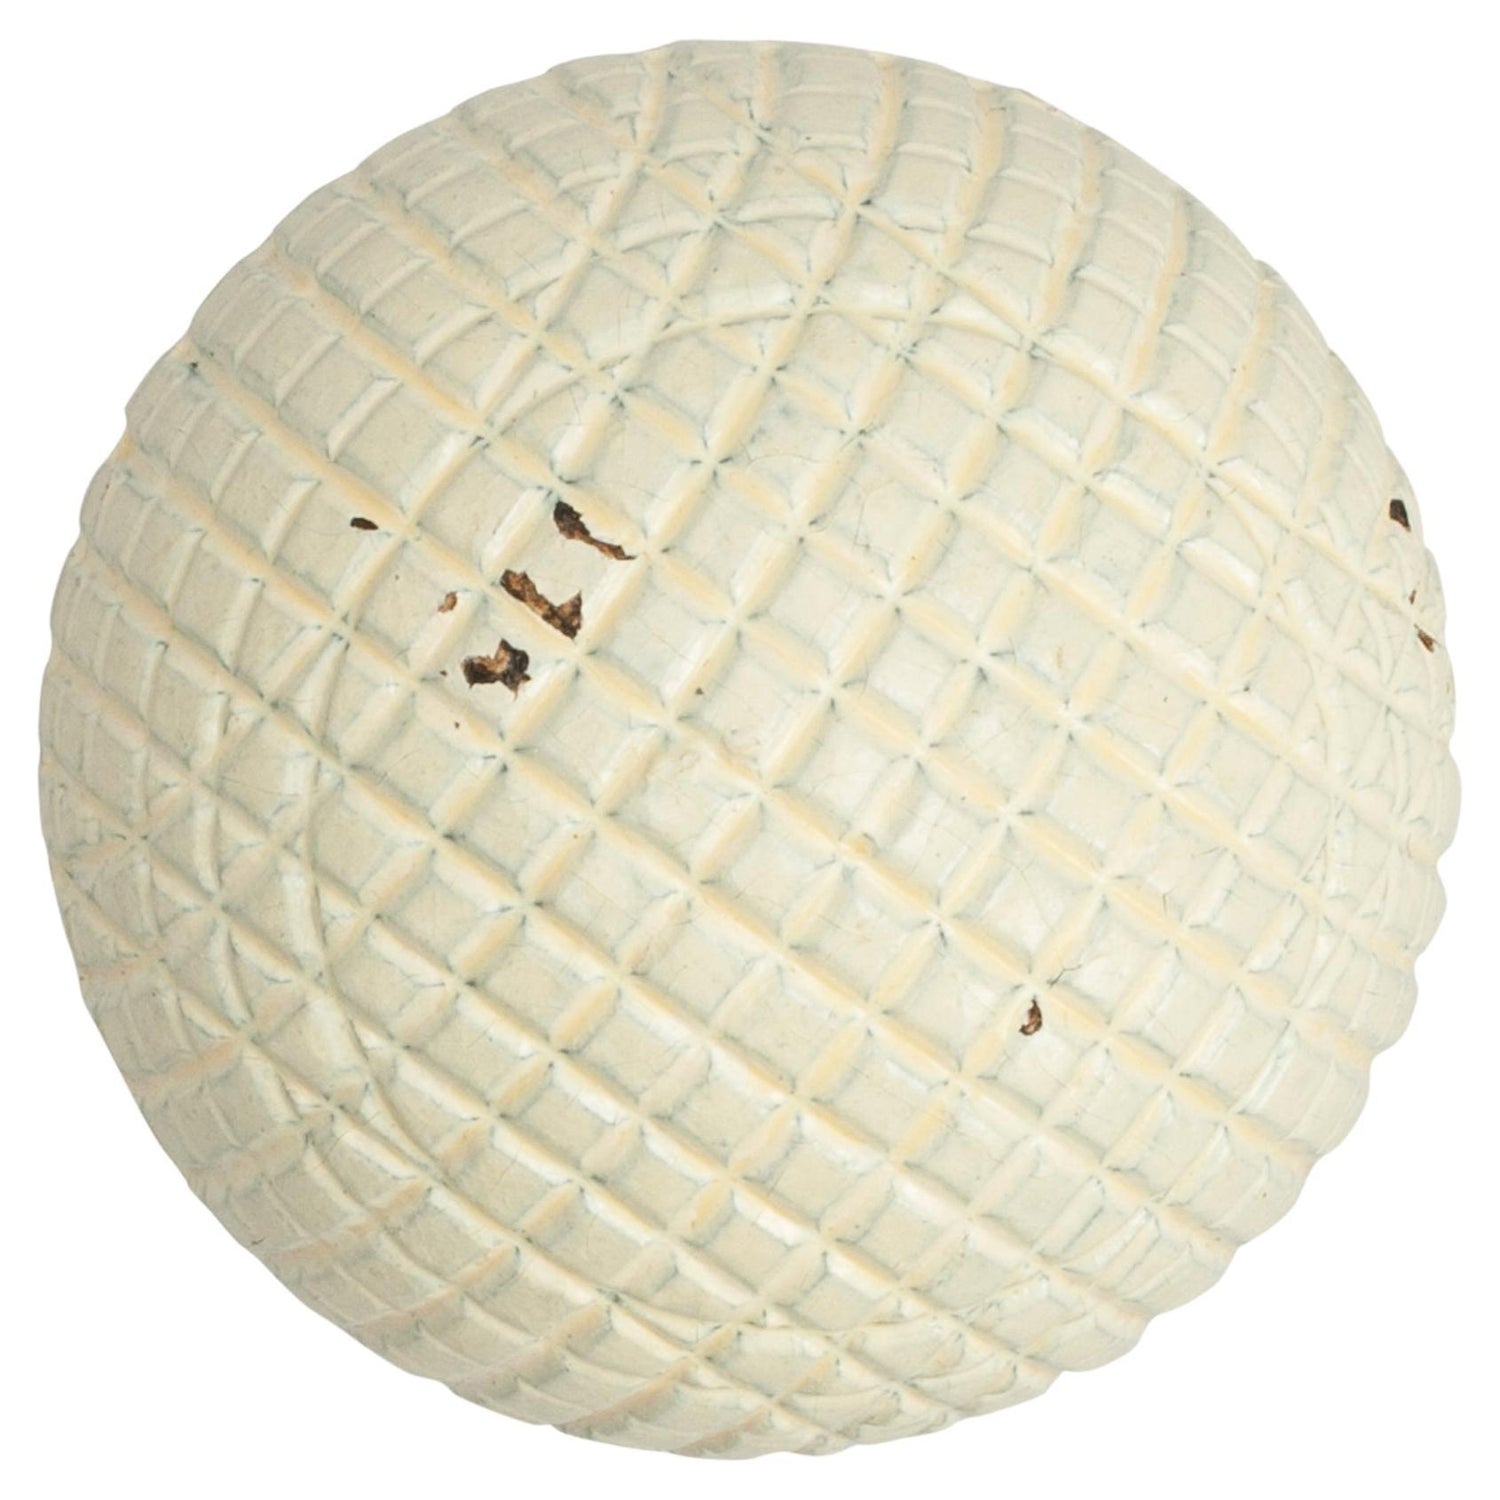 Vintage Golf Ball, Gutta Percha Mesh Pattern. For Sale at 1stDibs